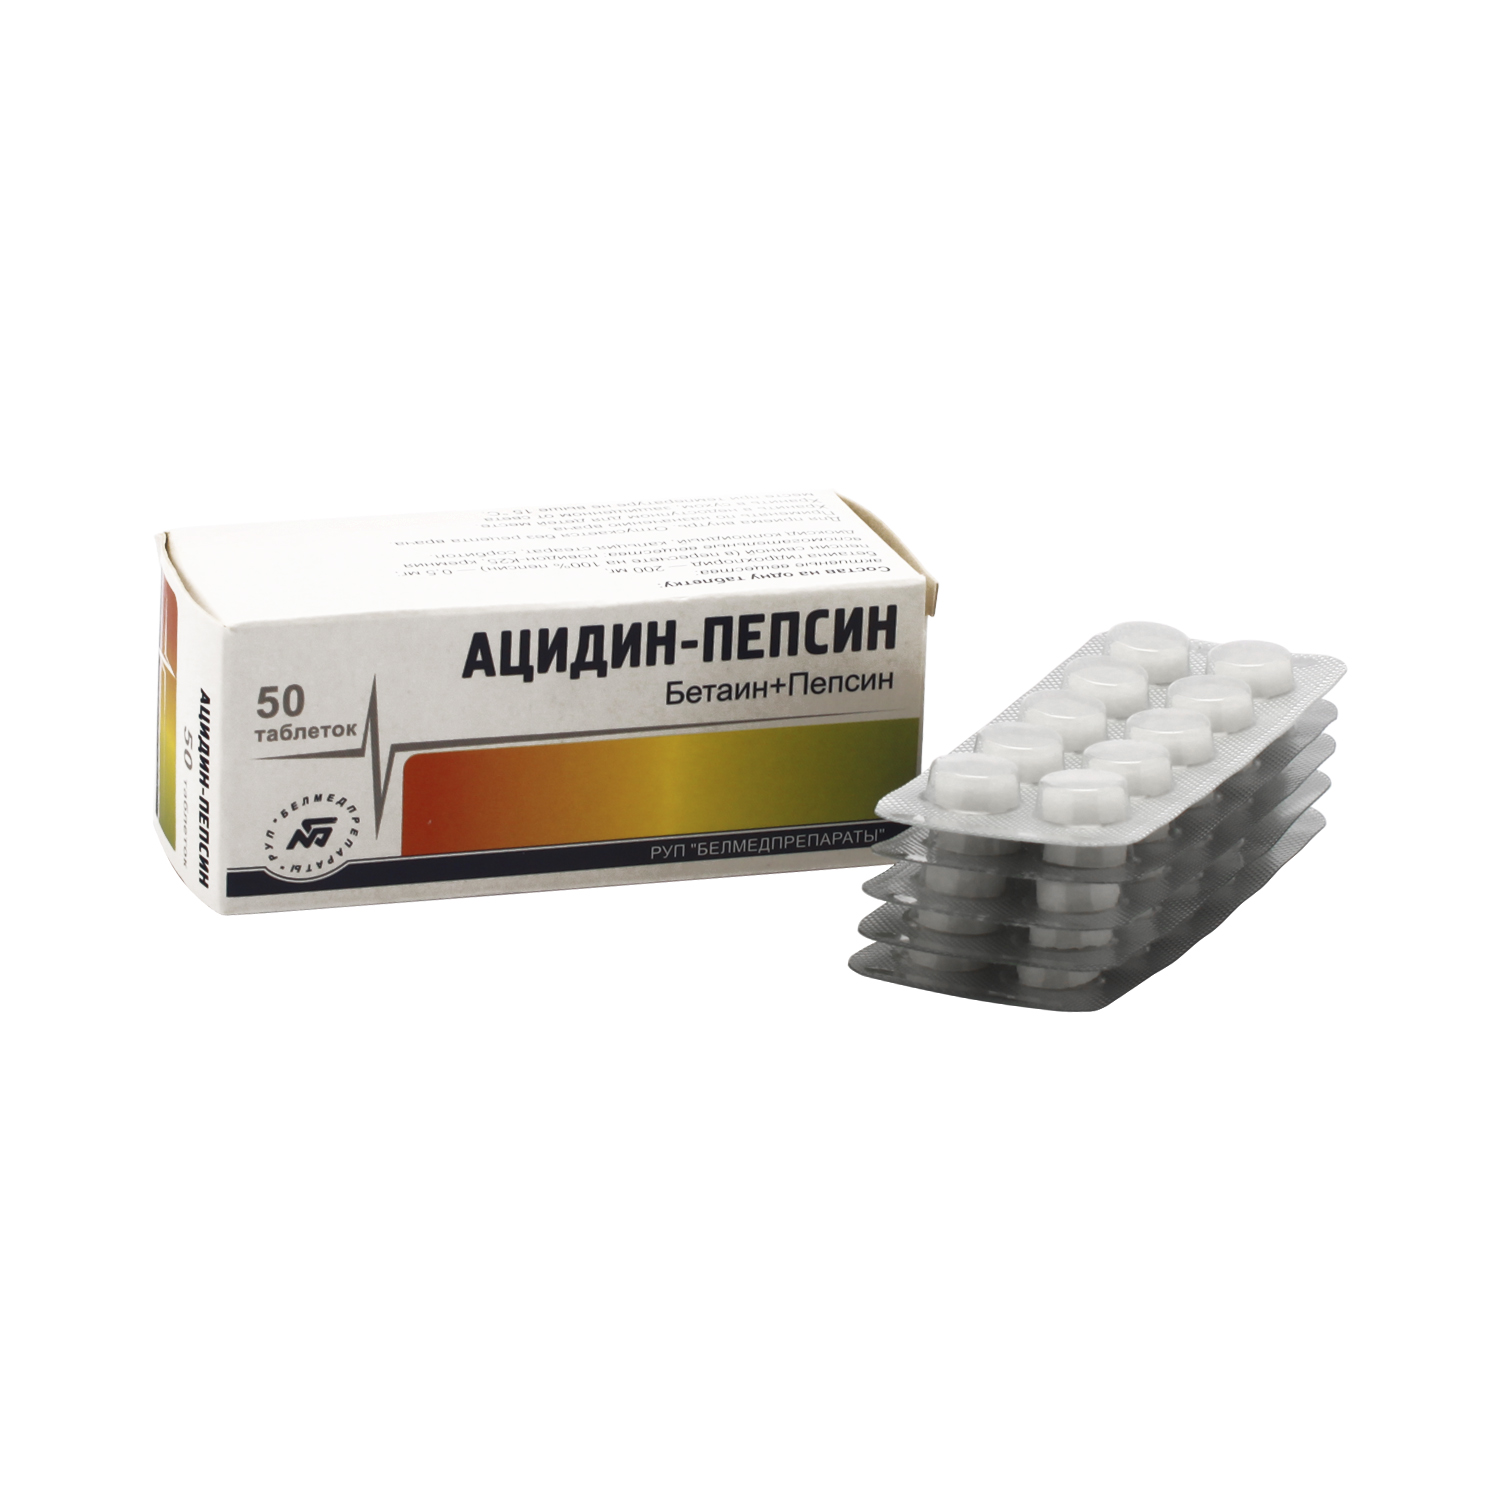 Ацидин-пепсин Таблетки 250 мг 50 шт  по цене 298,0 руб  .